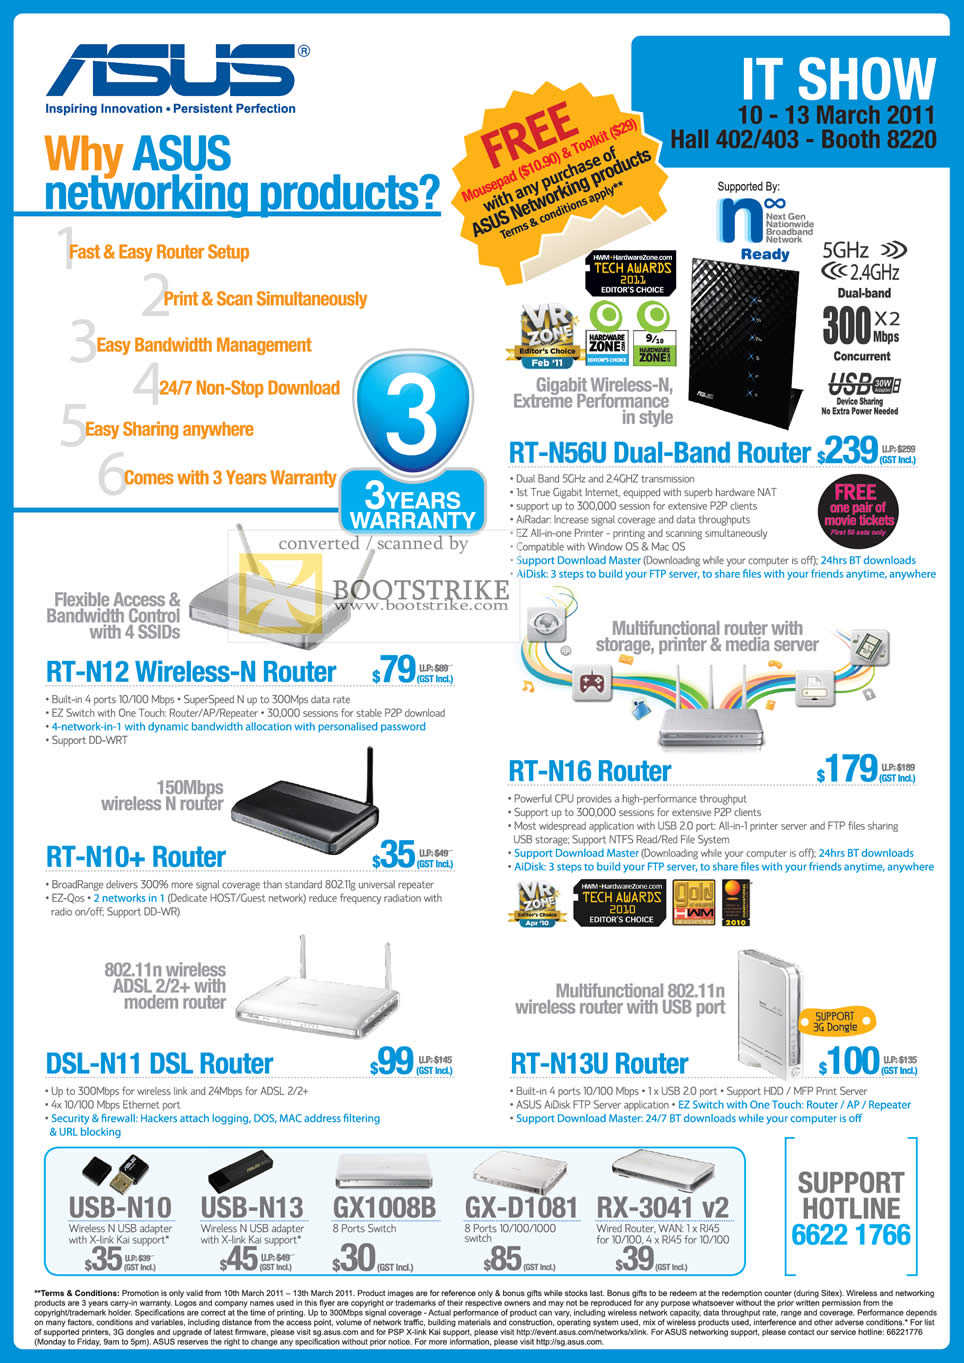 IT Show 2011 price list image brochure of ASUS Networking Router RT-N56U RT-N12 RT-N16 RT-N10 RT-N13U DSL-N11 USB N10 N13 GX1008B GX-D1081 RX-3041 V2